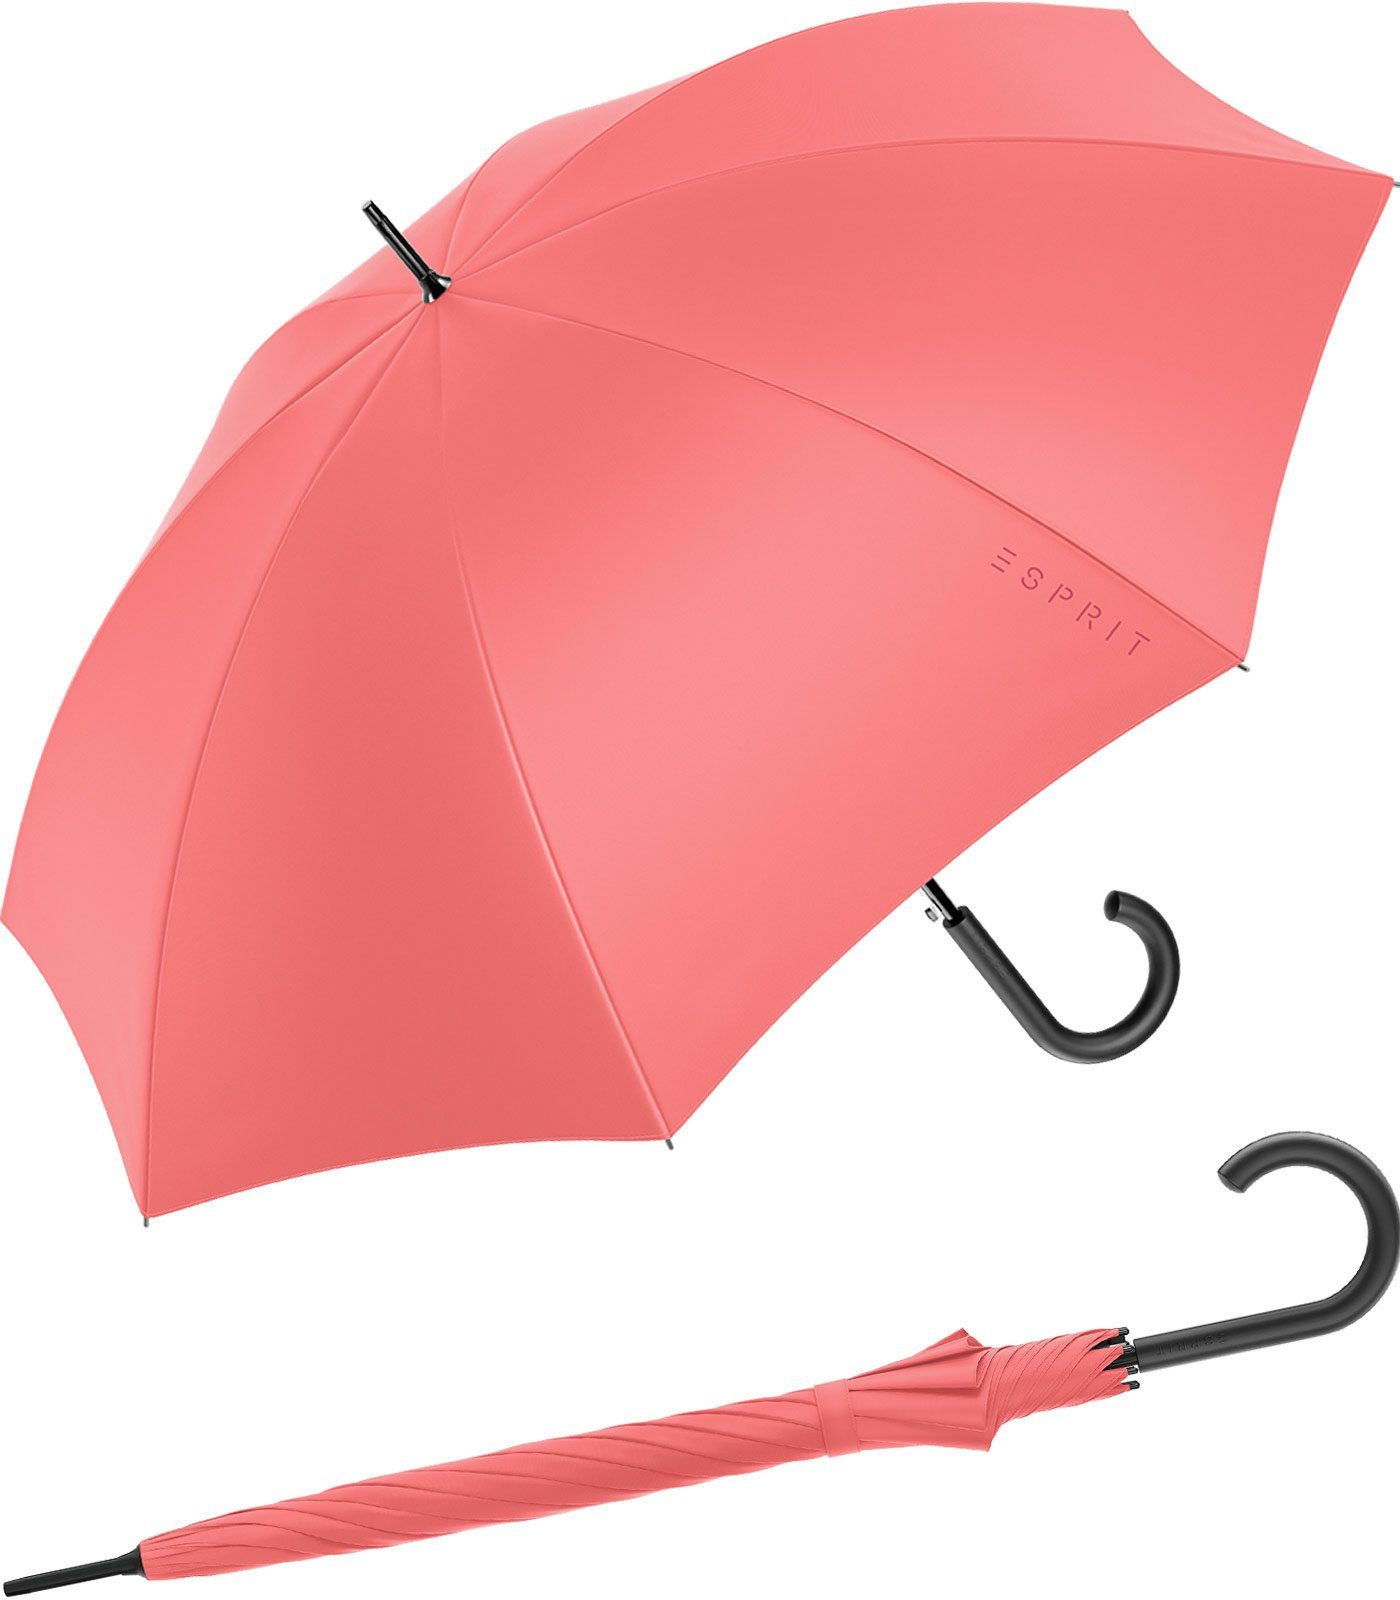 Esprit Langregenschirm Damen-Regenschirm mit Automatik FJ 2023, groß und stabil, in den Trendfarben koralle